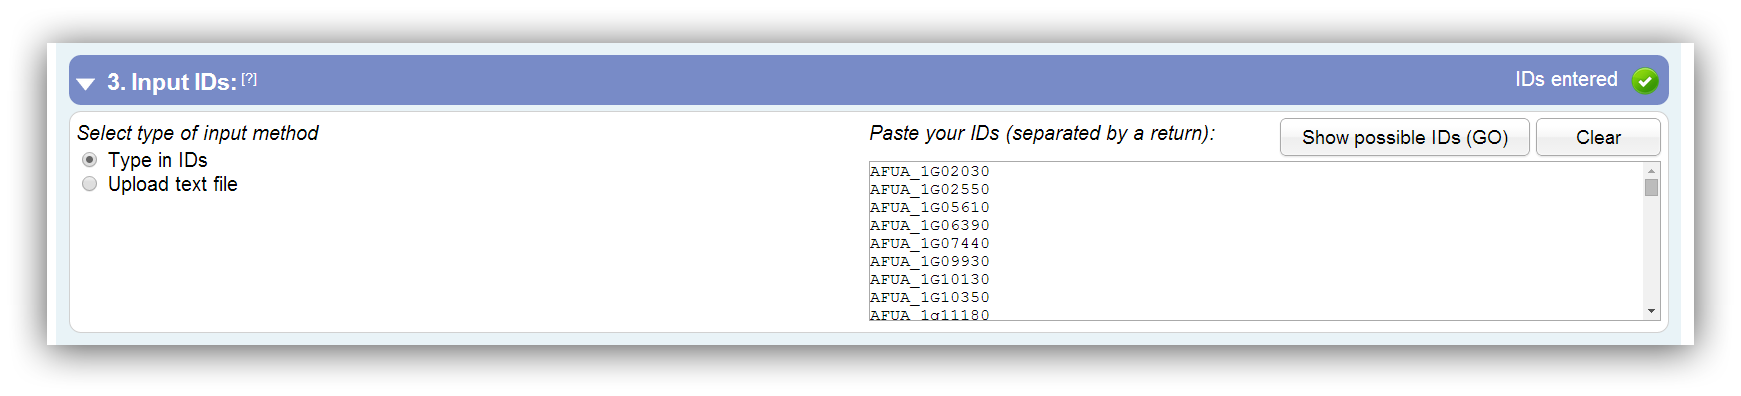 Screenshot - ID input